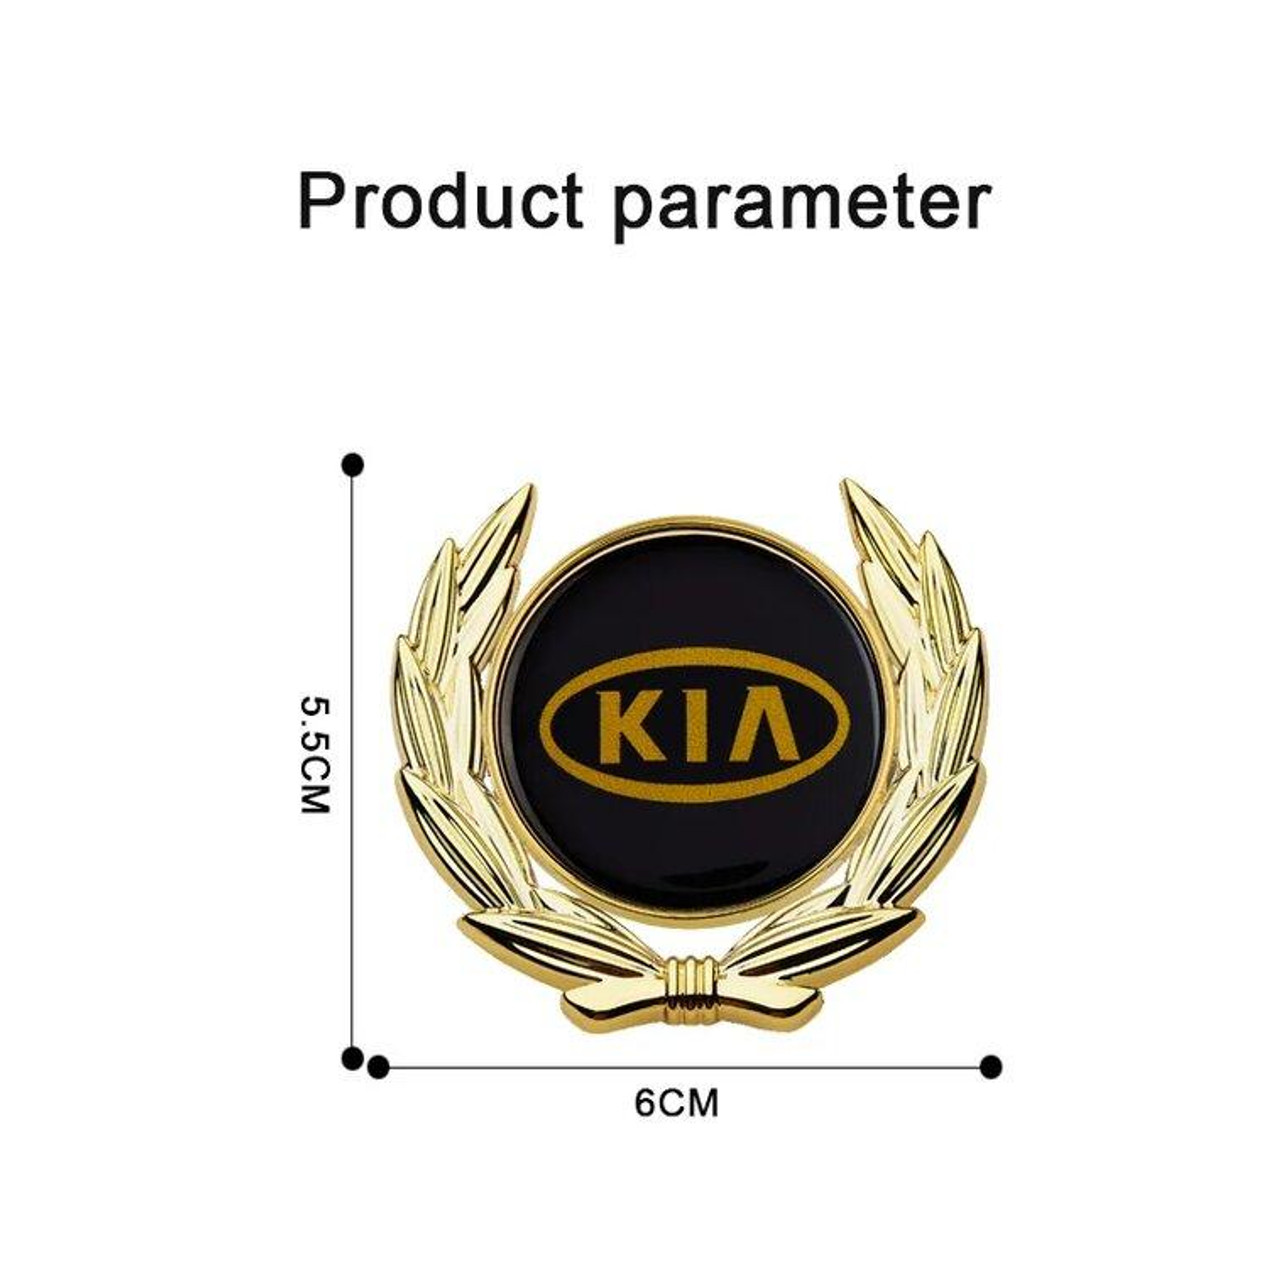 KIA Emblem Sticker Adhesive Tape Silver/Golden Adhesive Decal